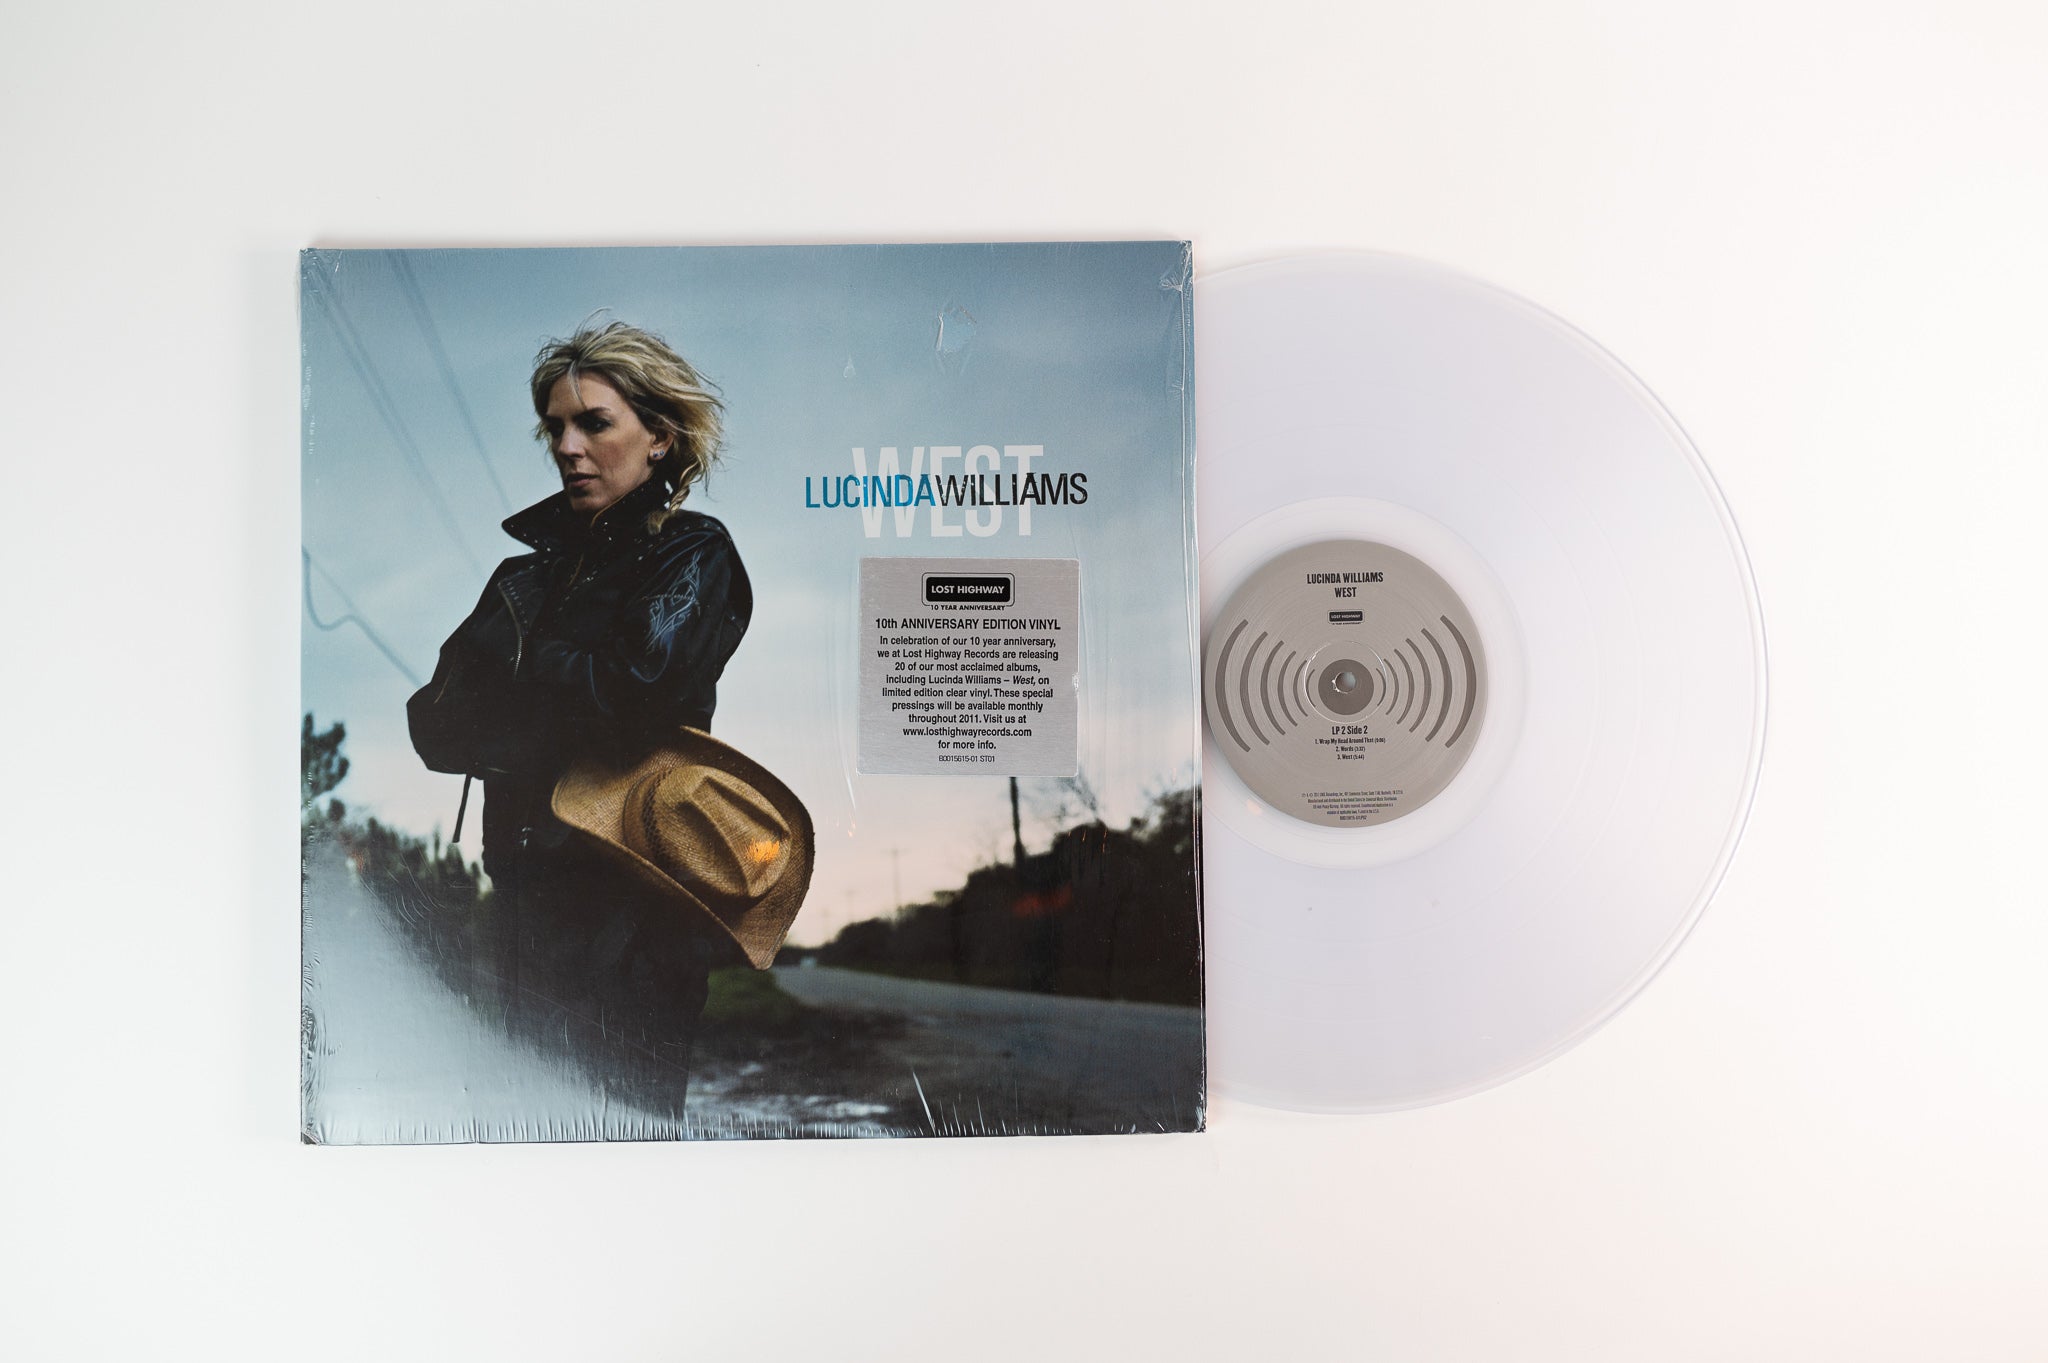 Lucinda Williams - West on Lost Highway Ltd Clear Vinyl Reissue